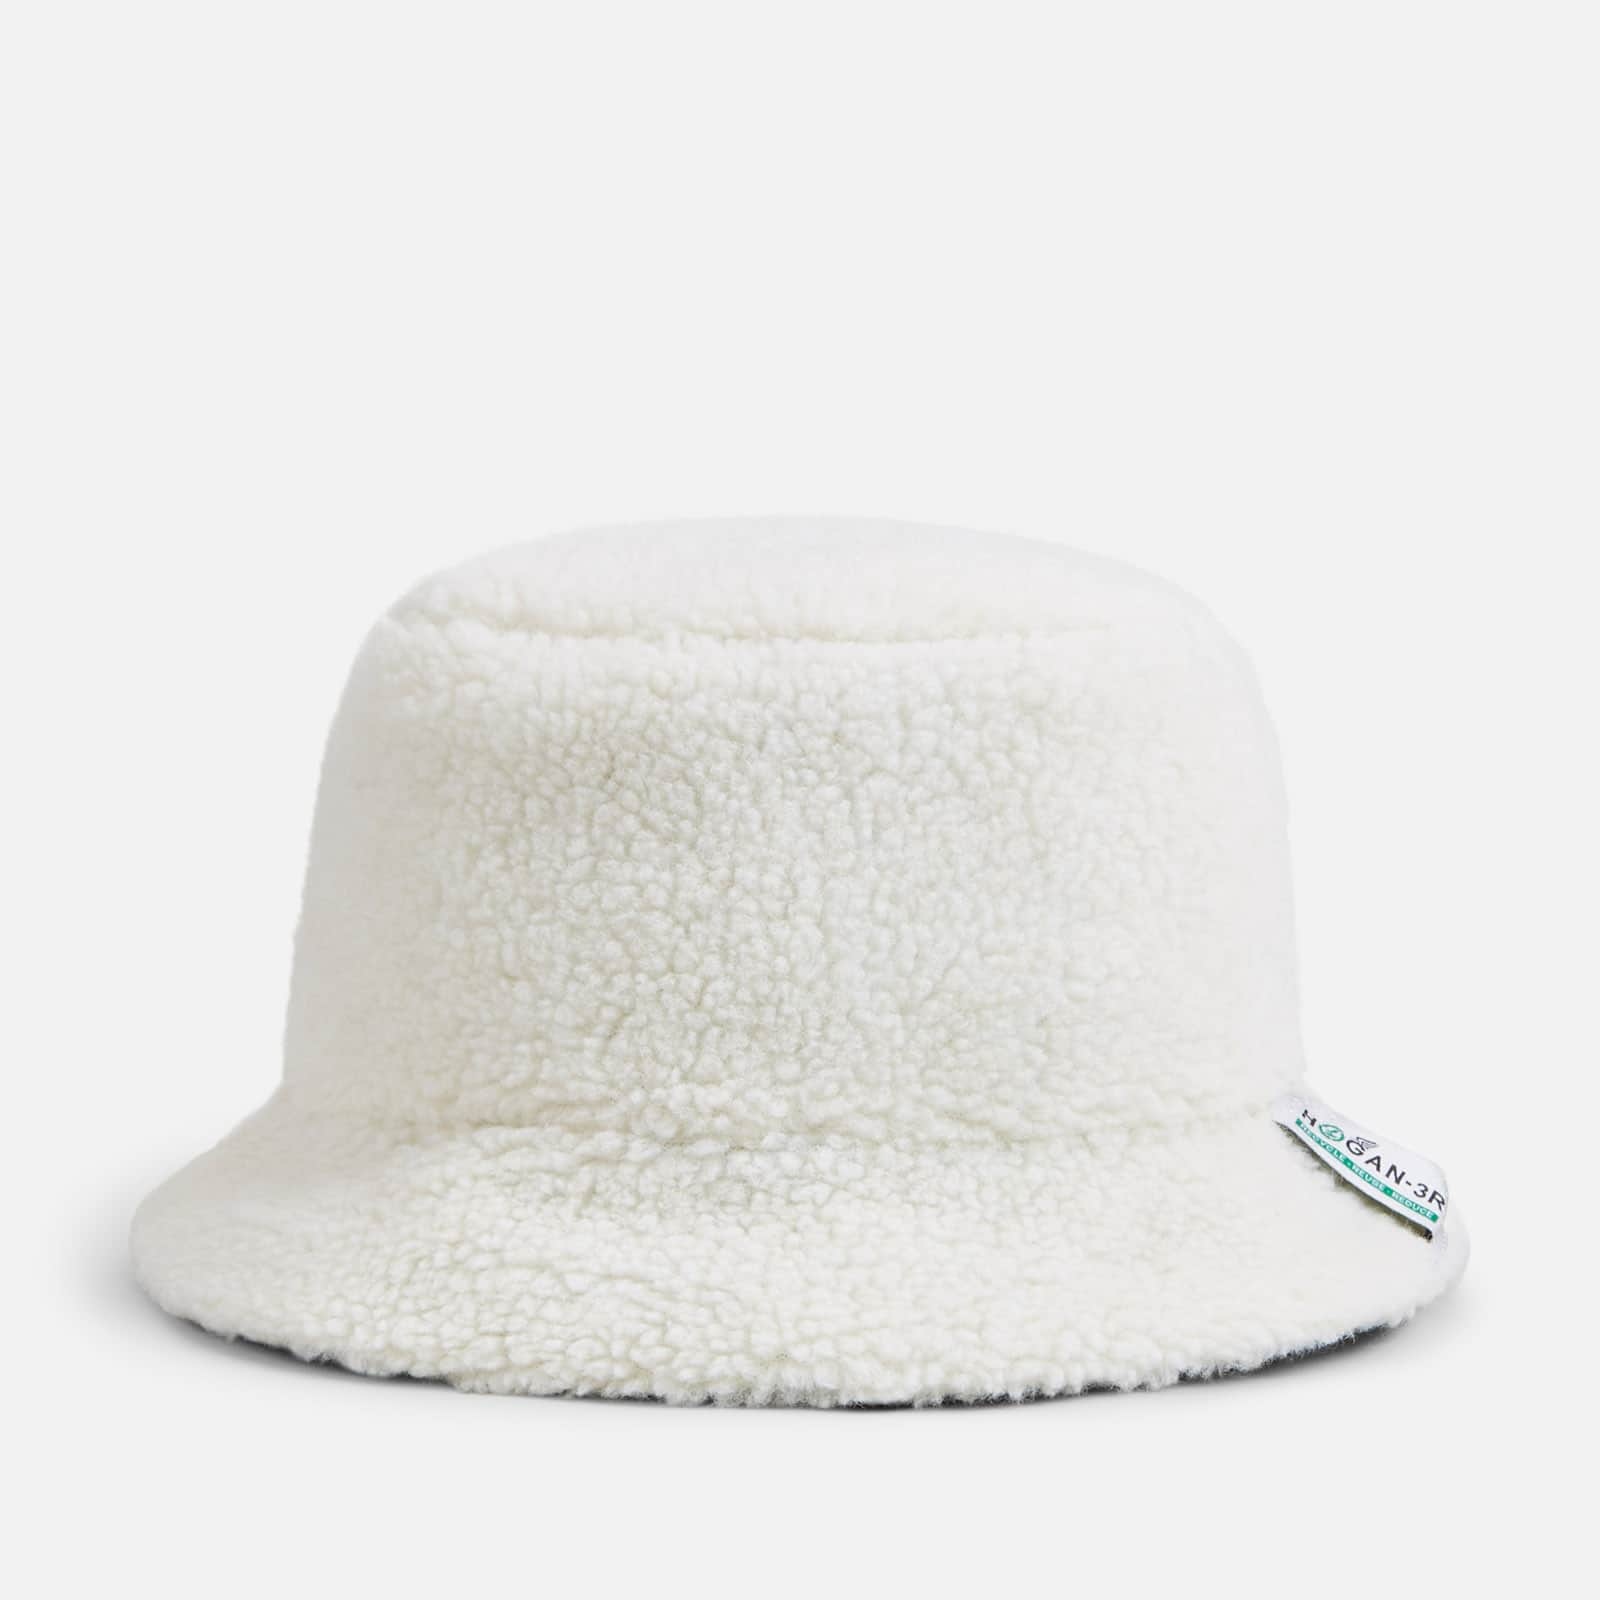 Reversible Hat Black White - 2